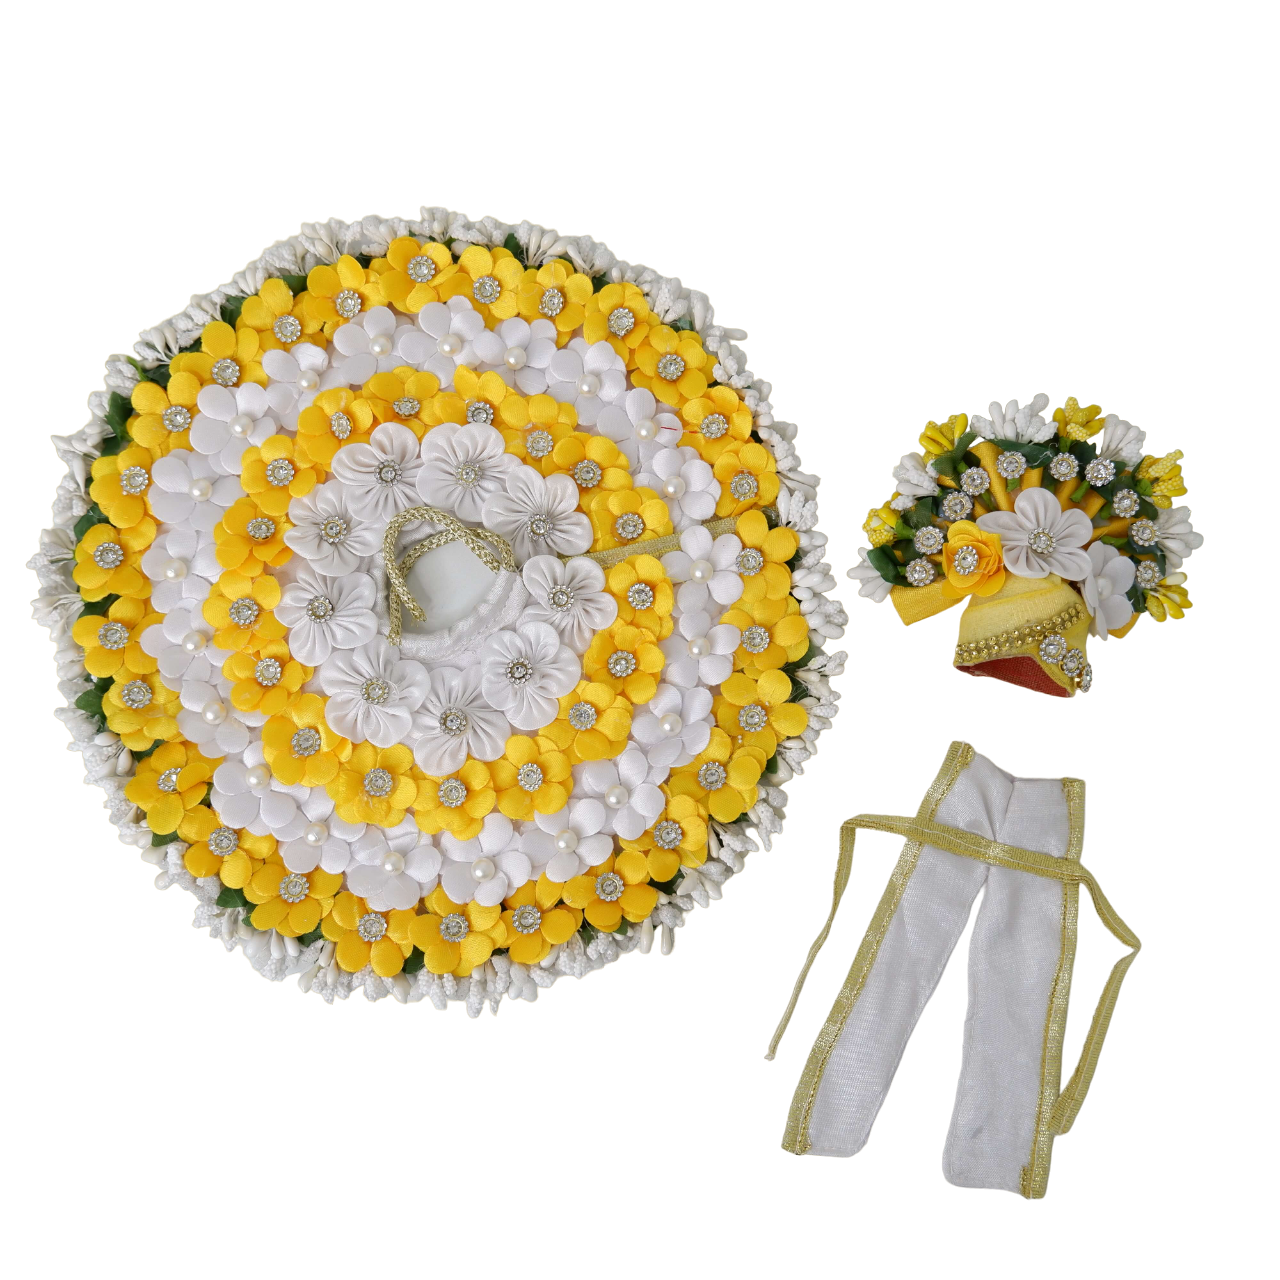 Ladoo Gopal Ji Poshak: Yellow and White Flower with White Stone Detailing with Matching Pagdi